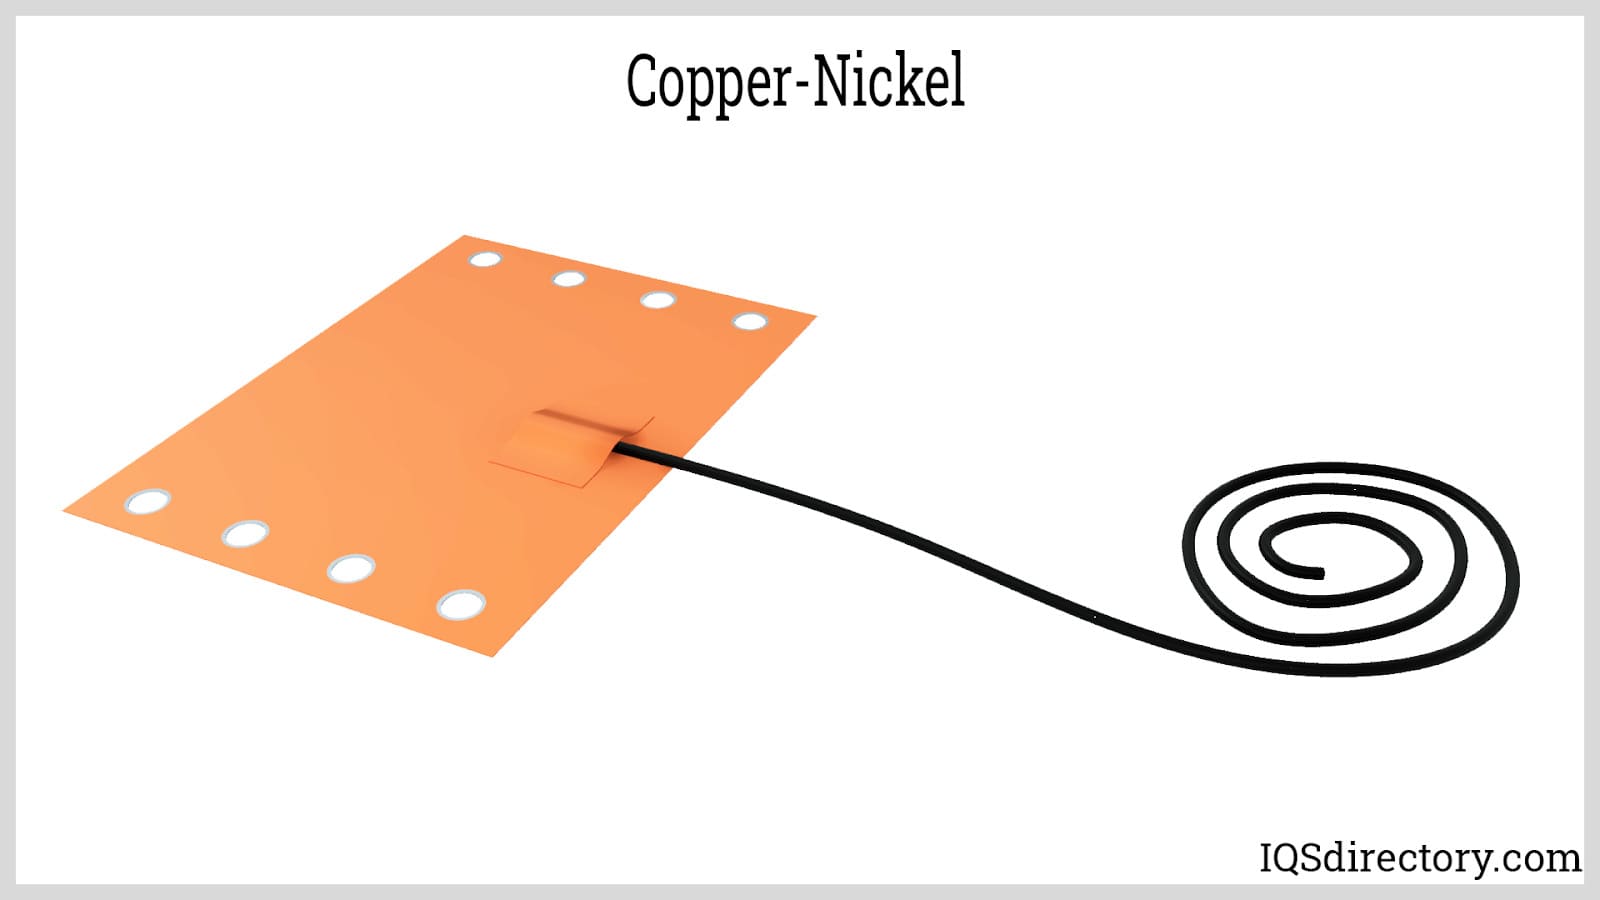 Copper-Nickel